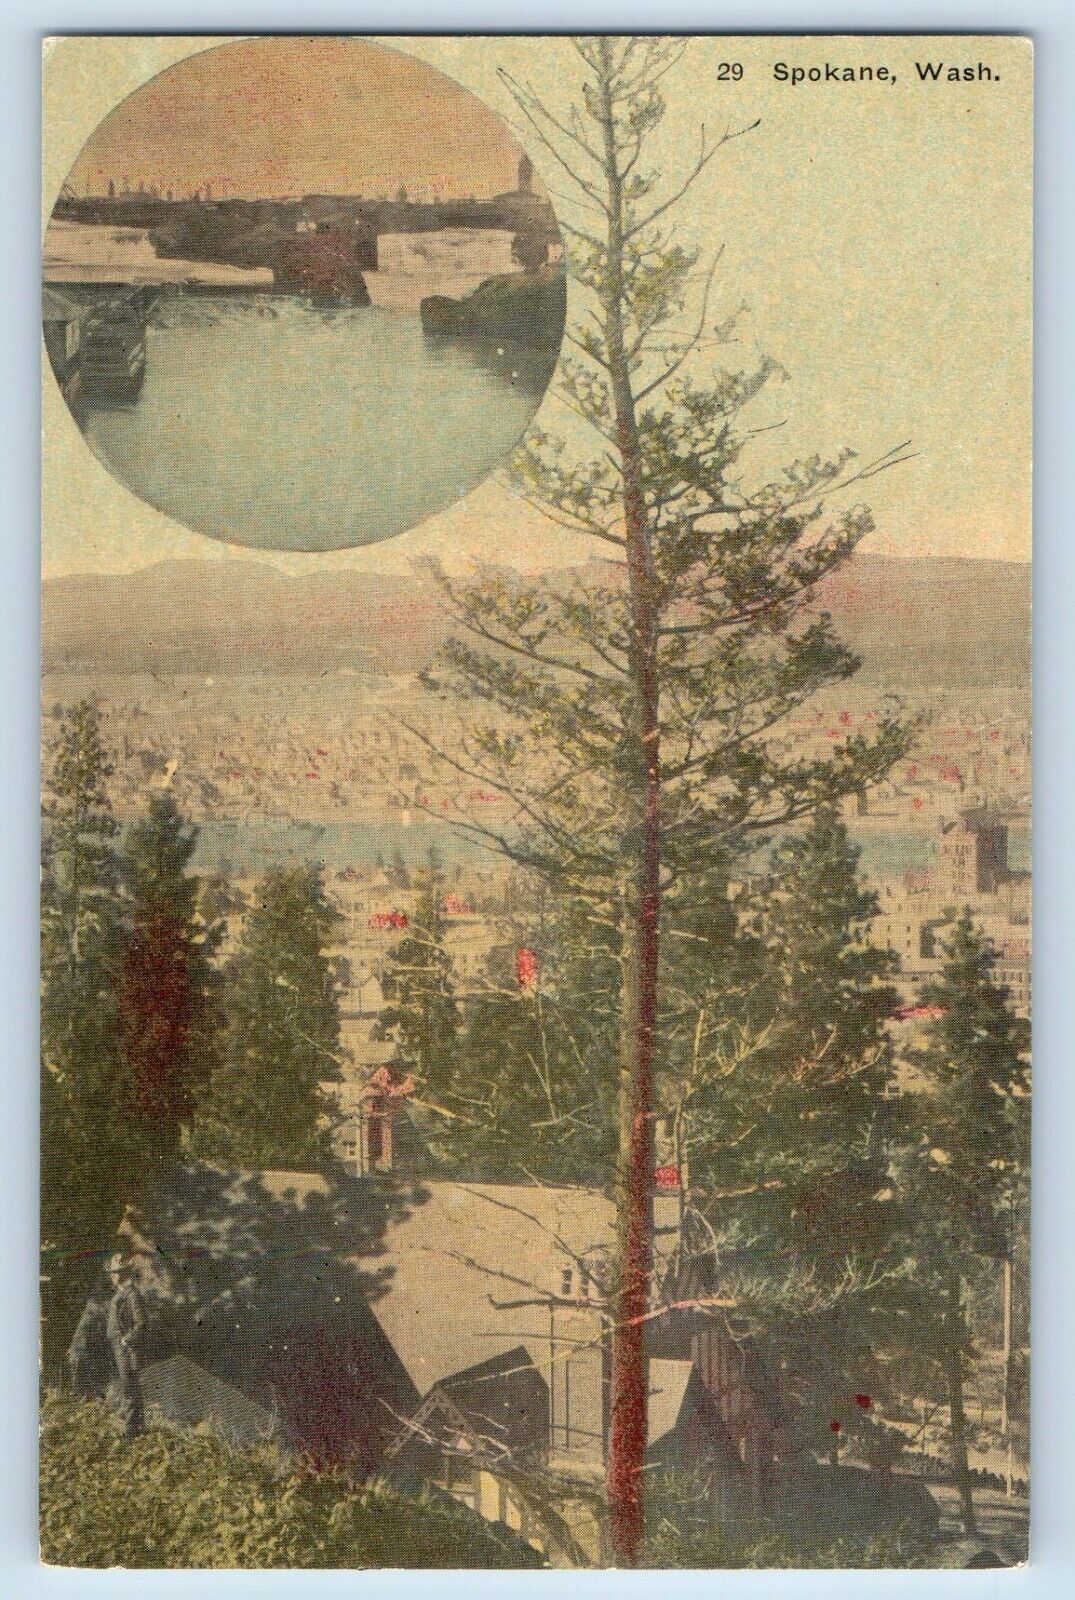 Spokane WA Postcard Soo Line Railroad Pacific Coast Advertising c1910's Antique